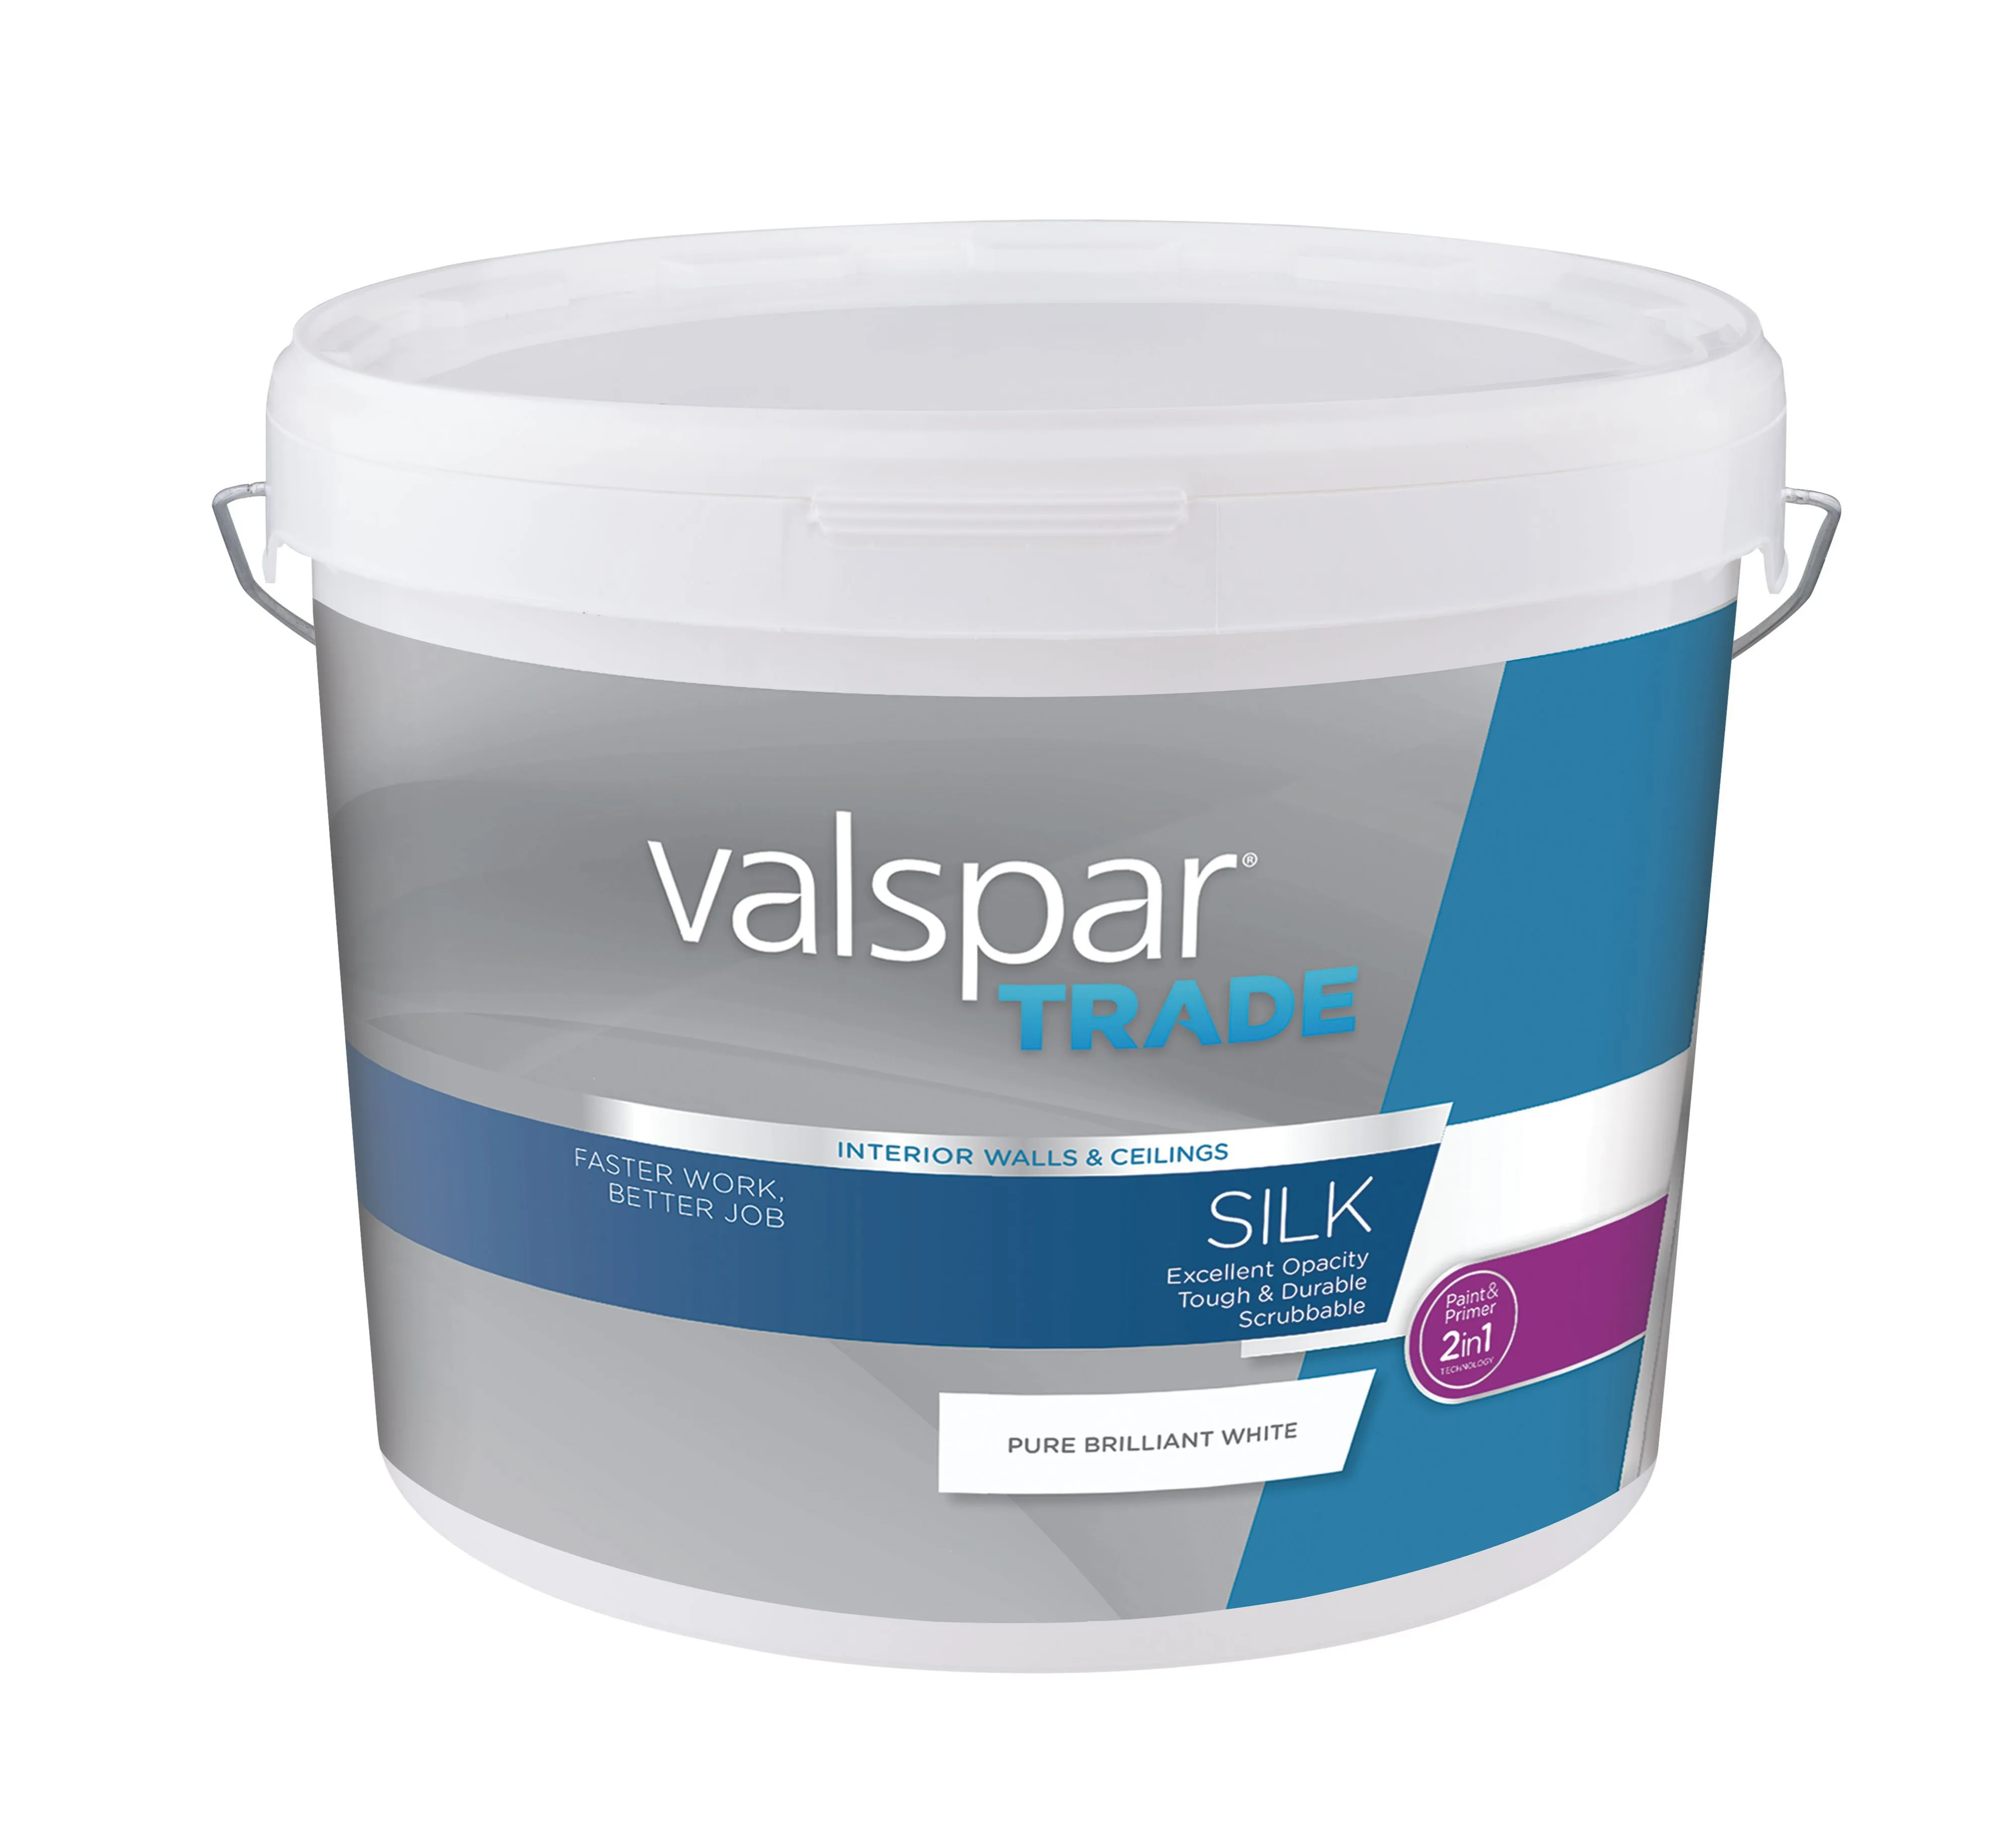 Valspar Trade Pure brilliant white Silk Emulsion paint, 10L